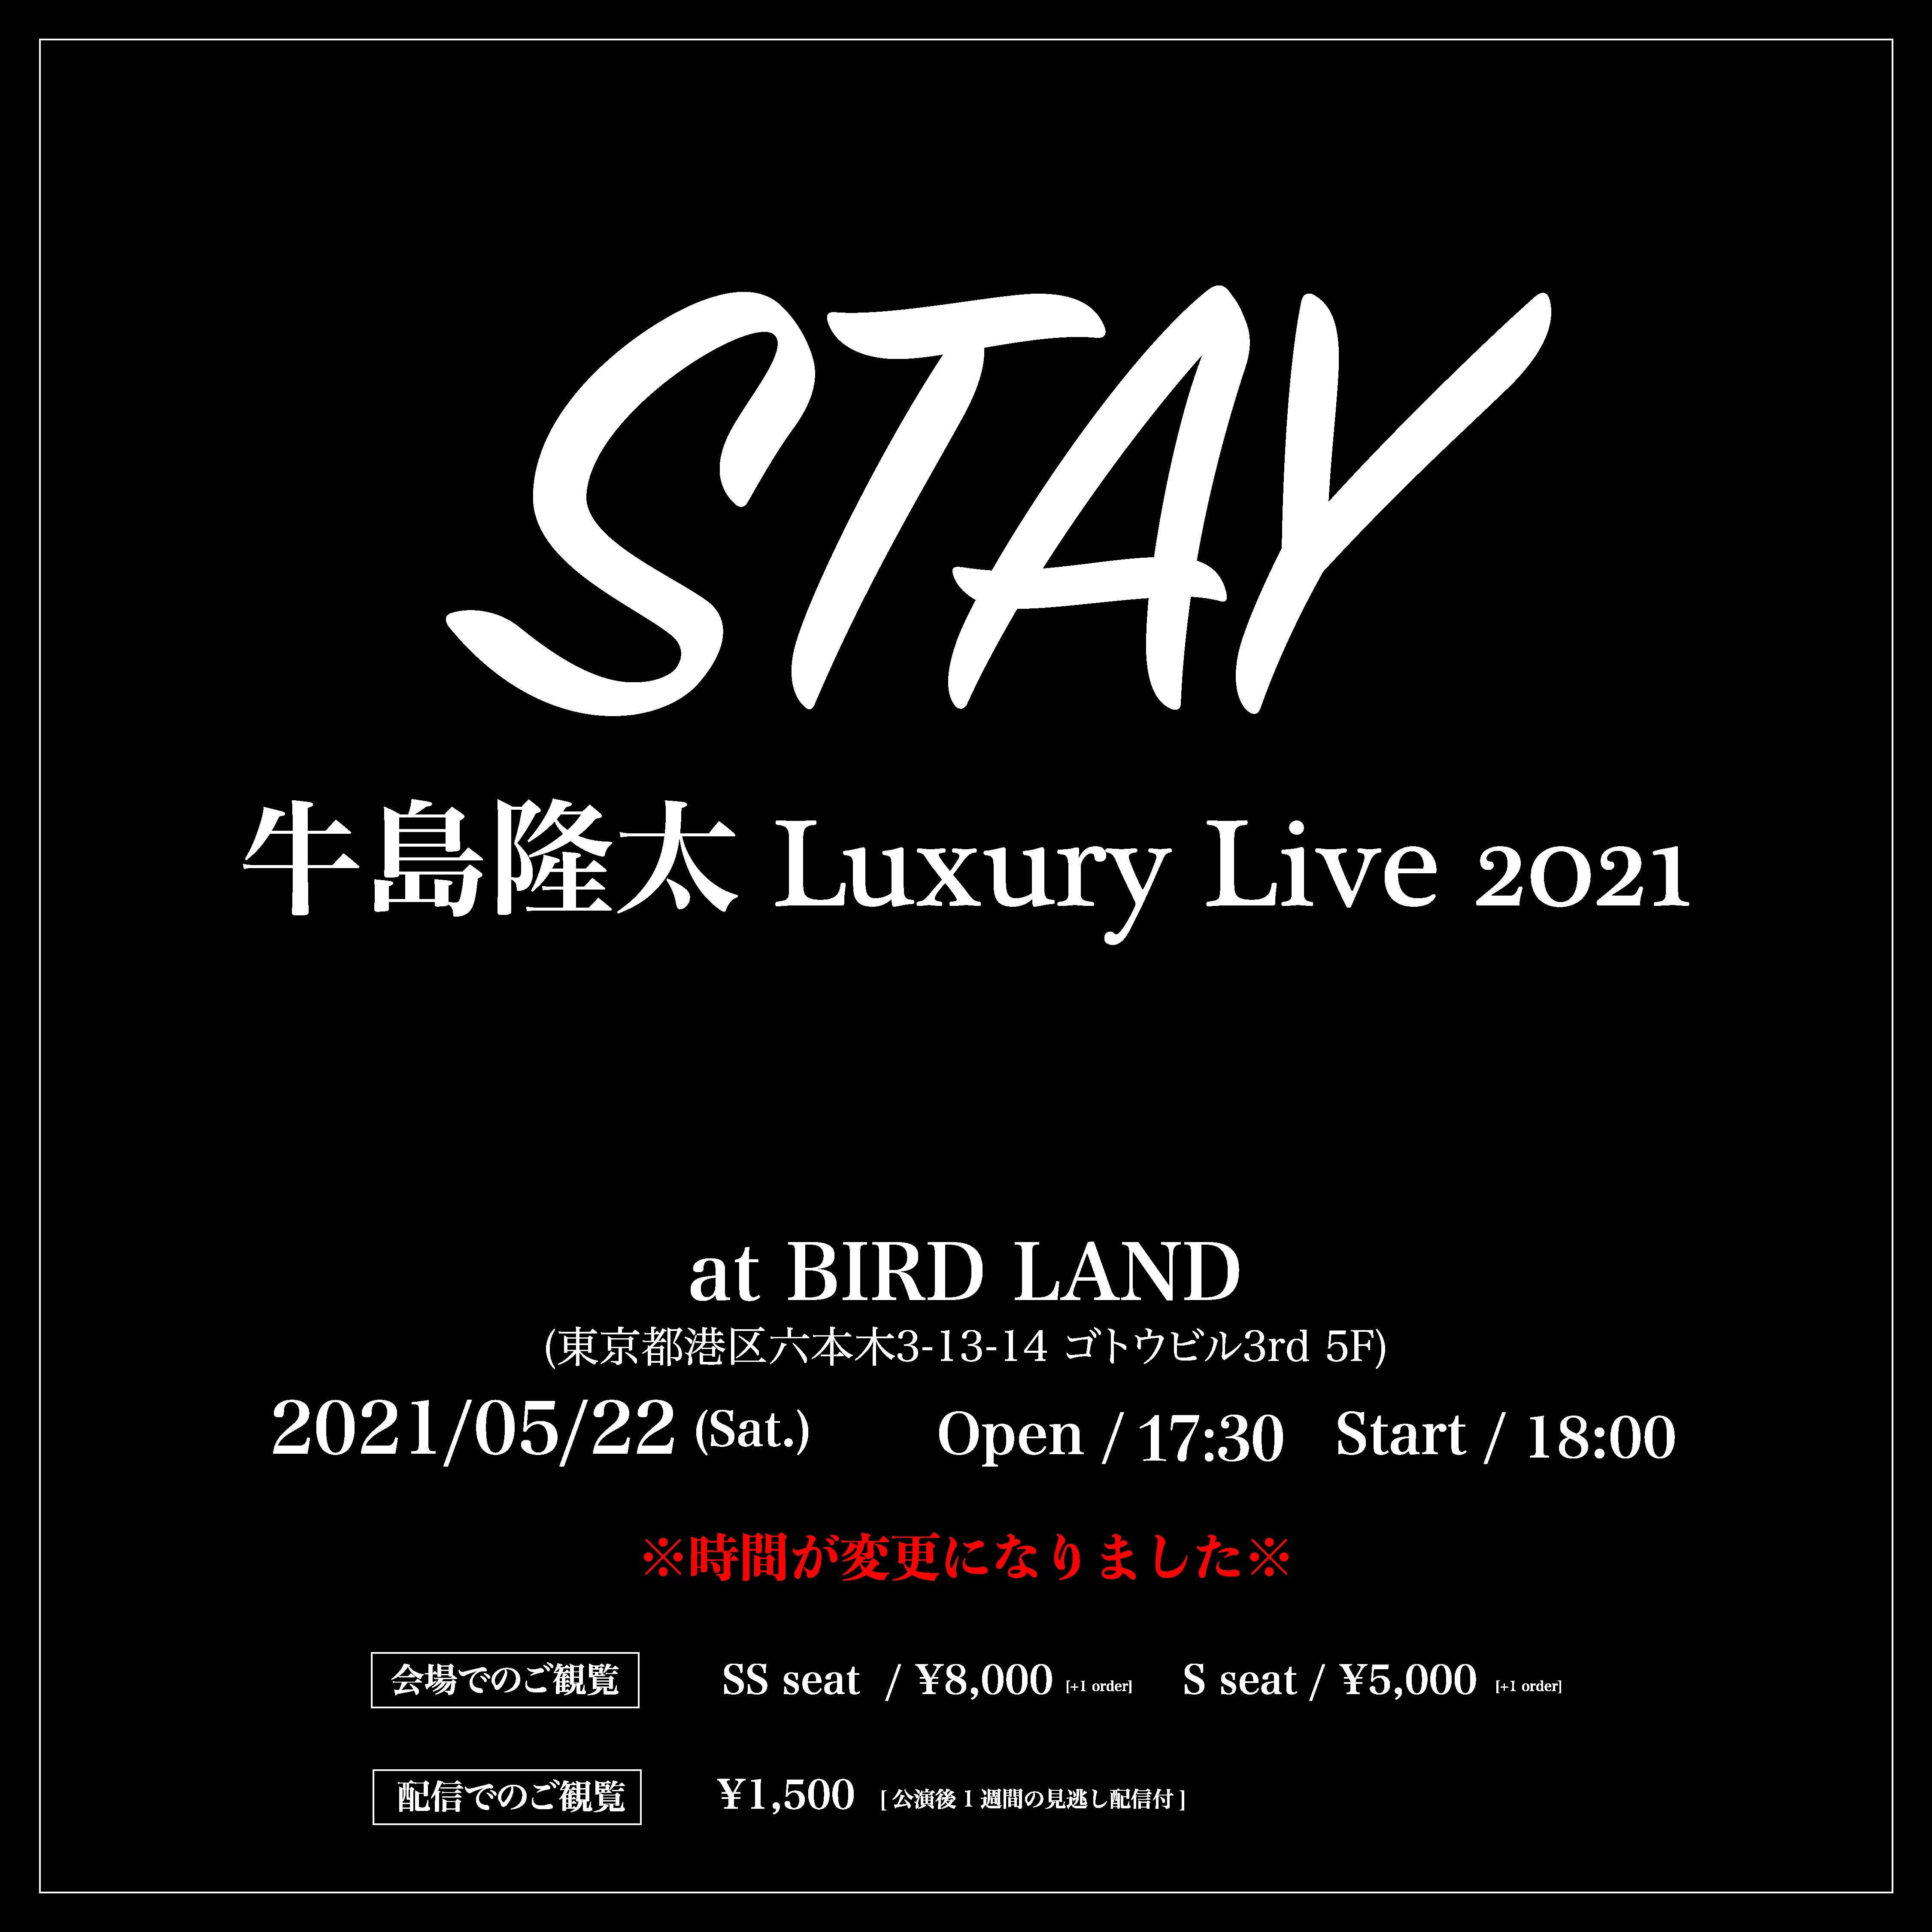 牛島隆太LuxuryLive 2021 "STAY"  at BIRD LAND